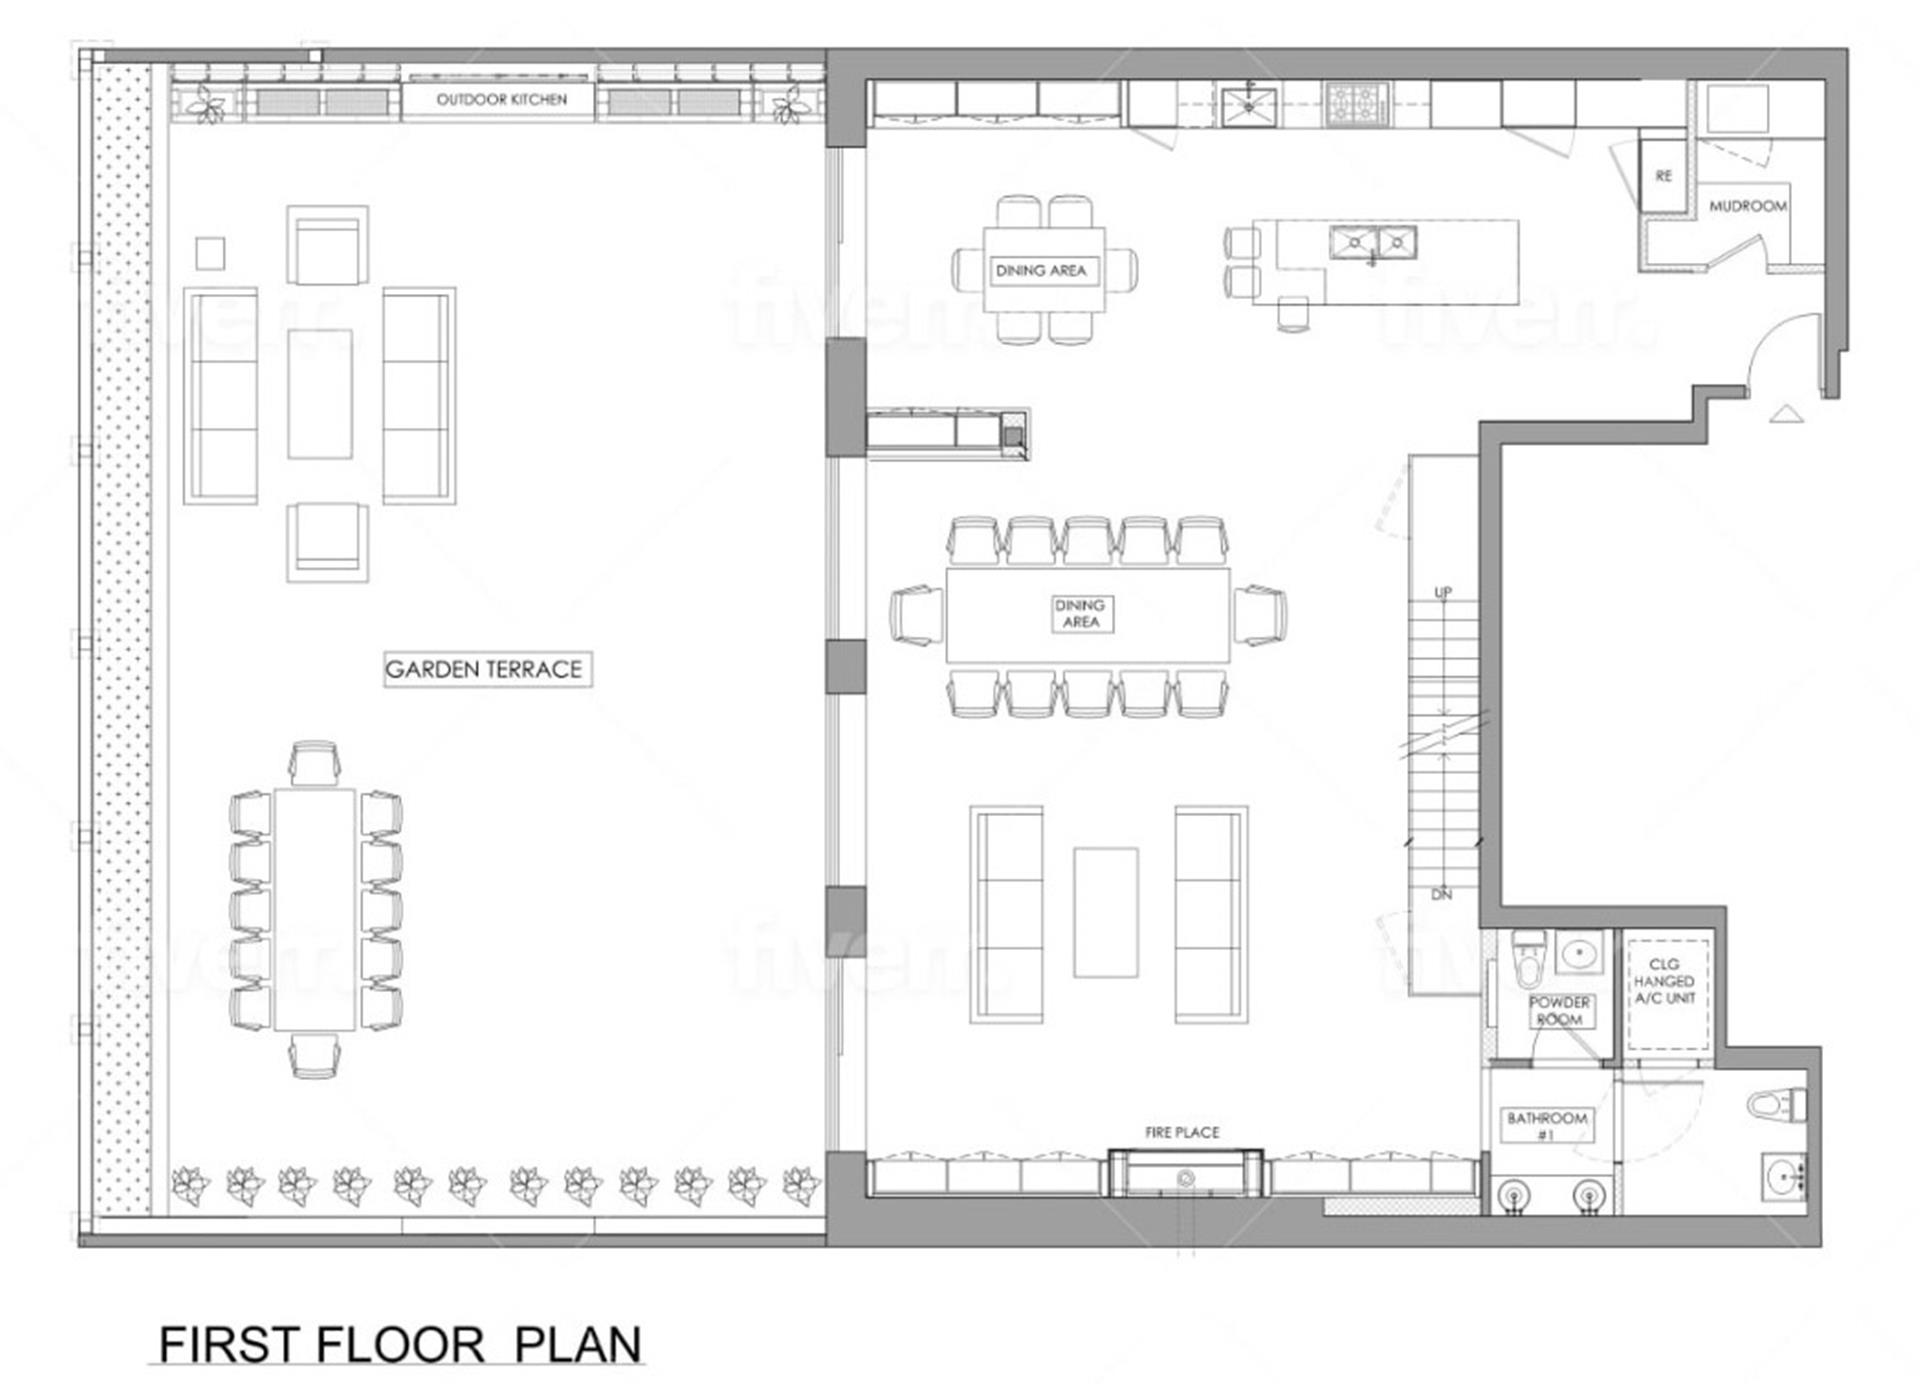 Floorplan for 433 East 74th Street, GARDEN